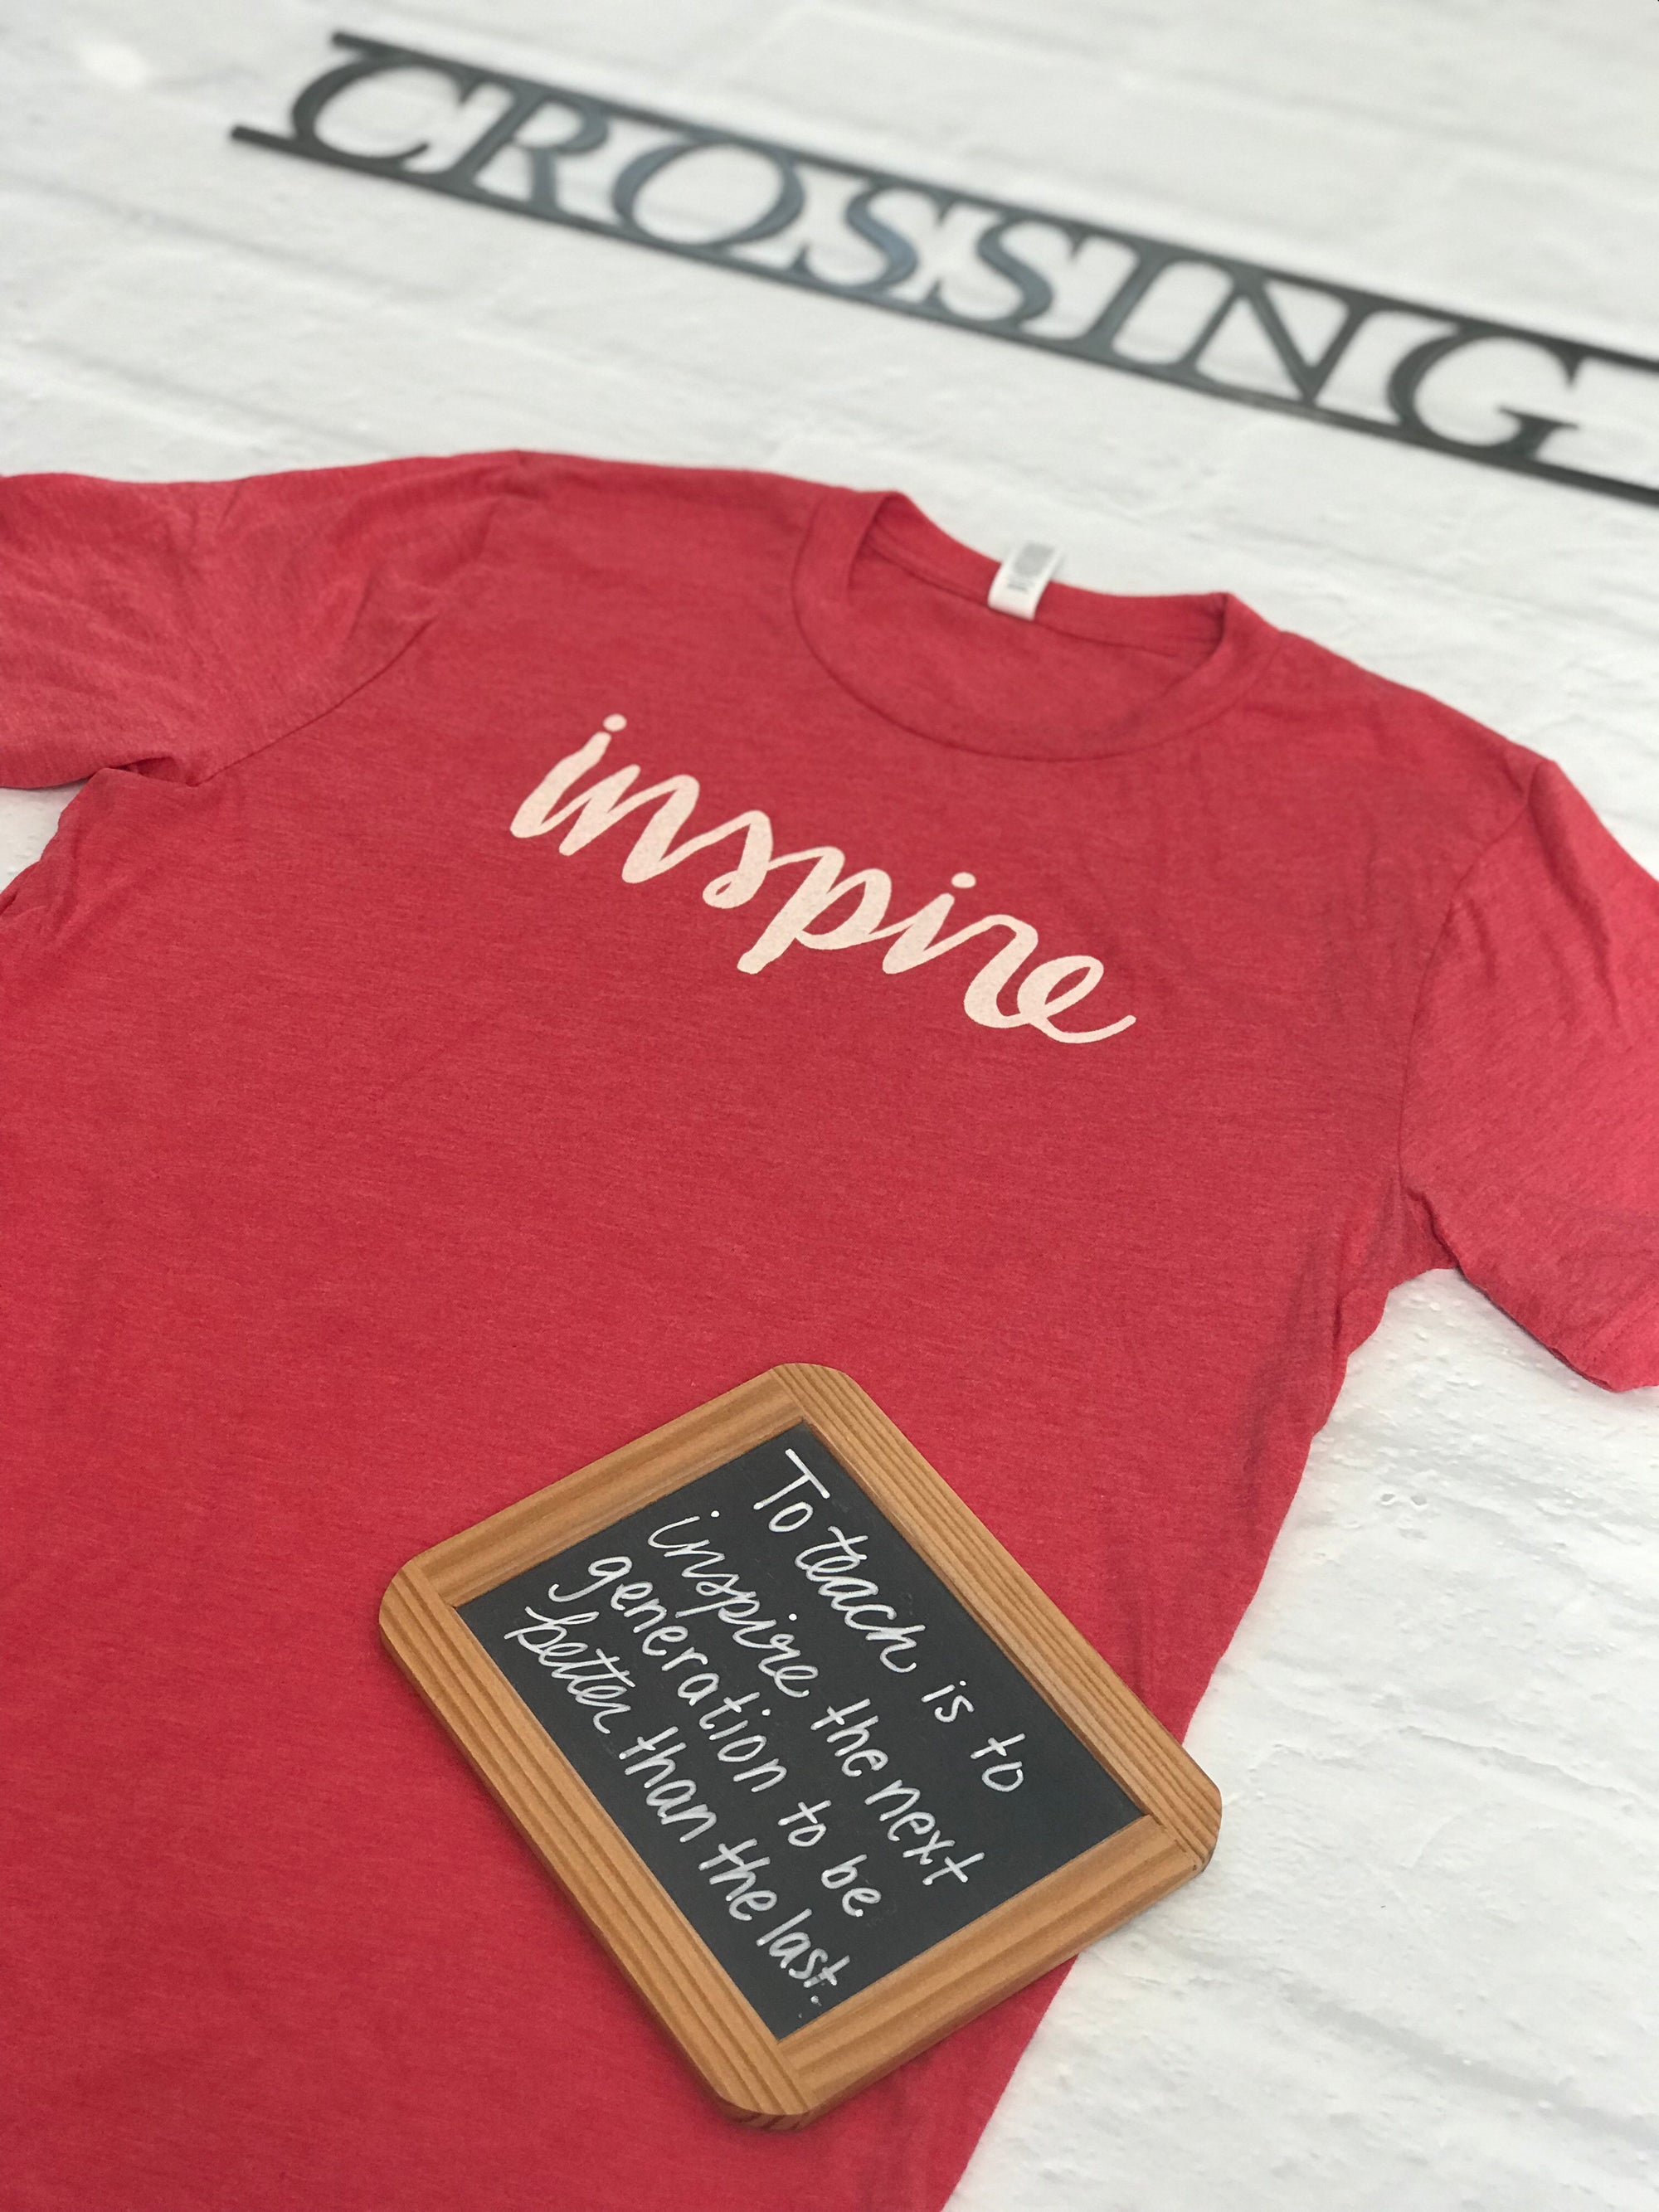 "Inspire" shirt for Educators